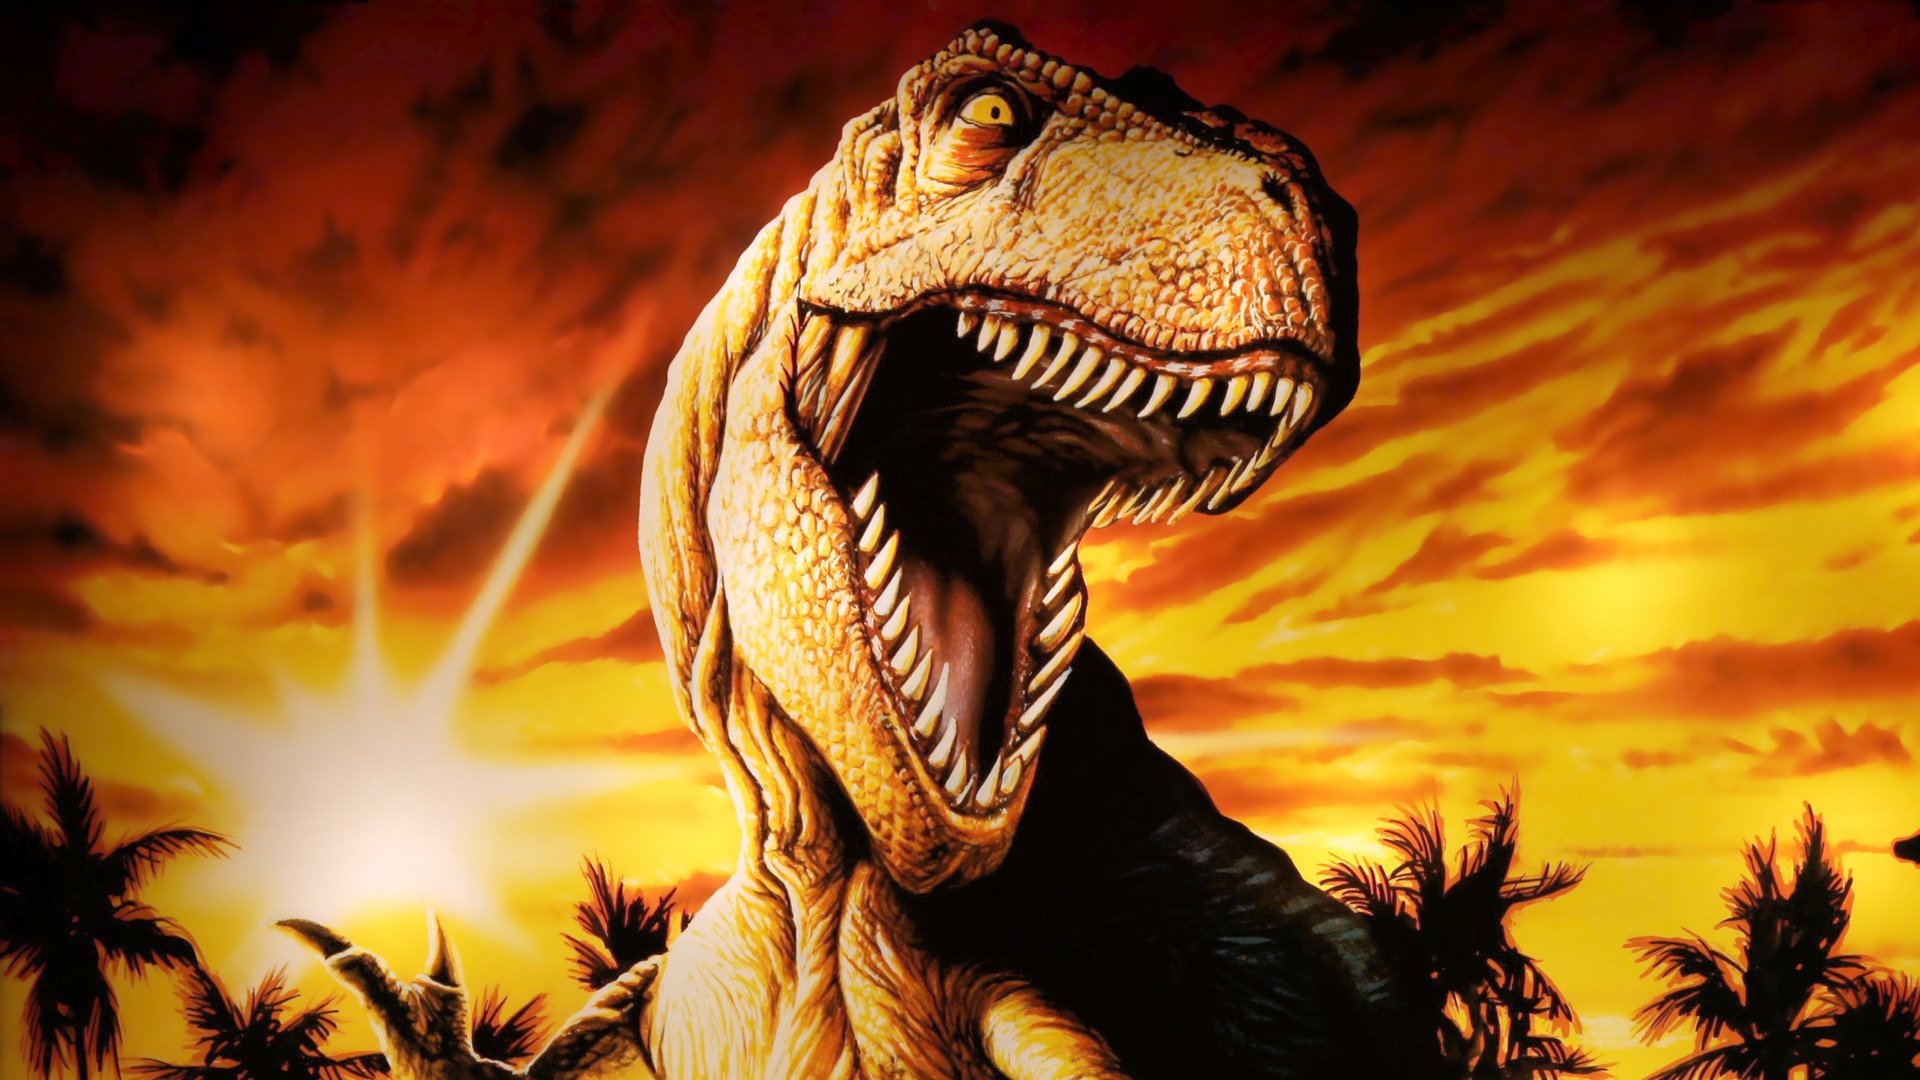 Jurassic Park Wallpaper HD | PixelsTalk.Net